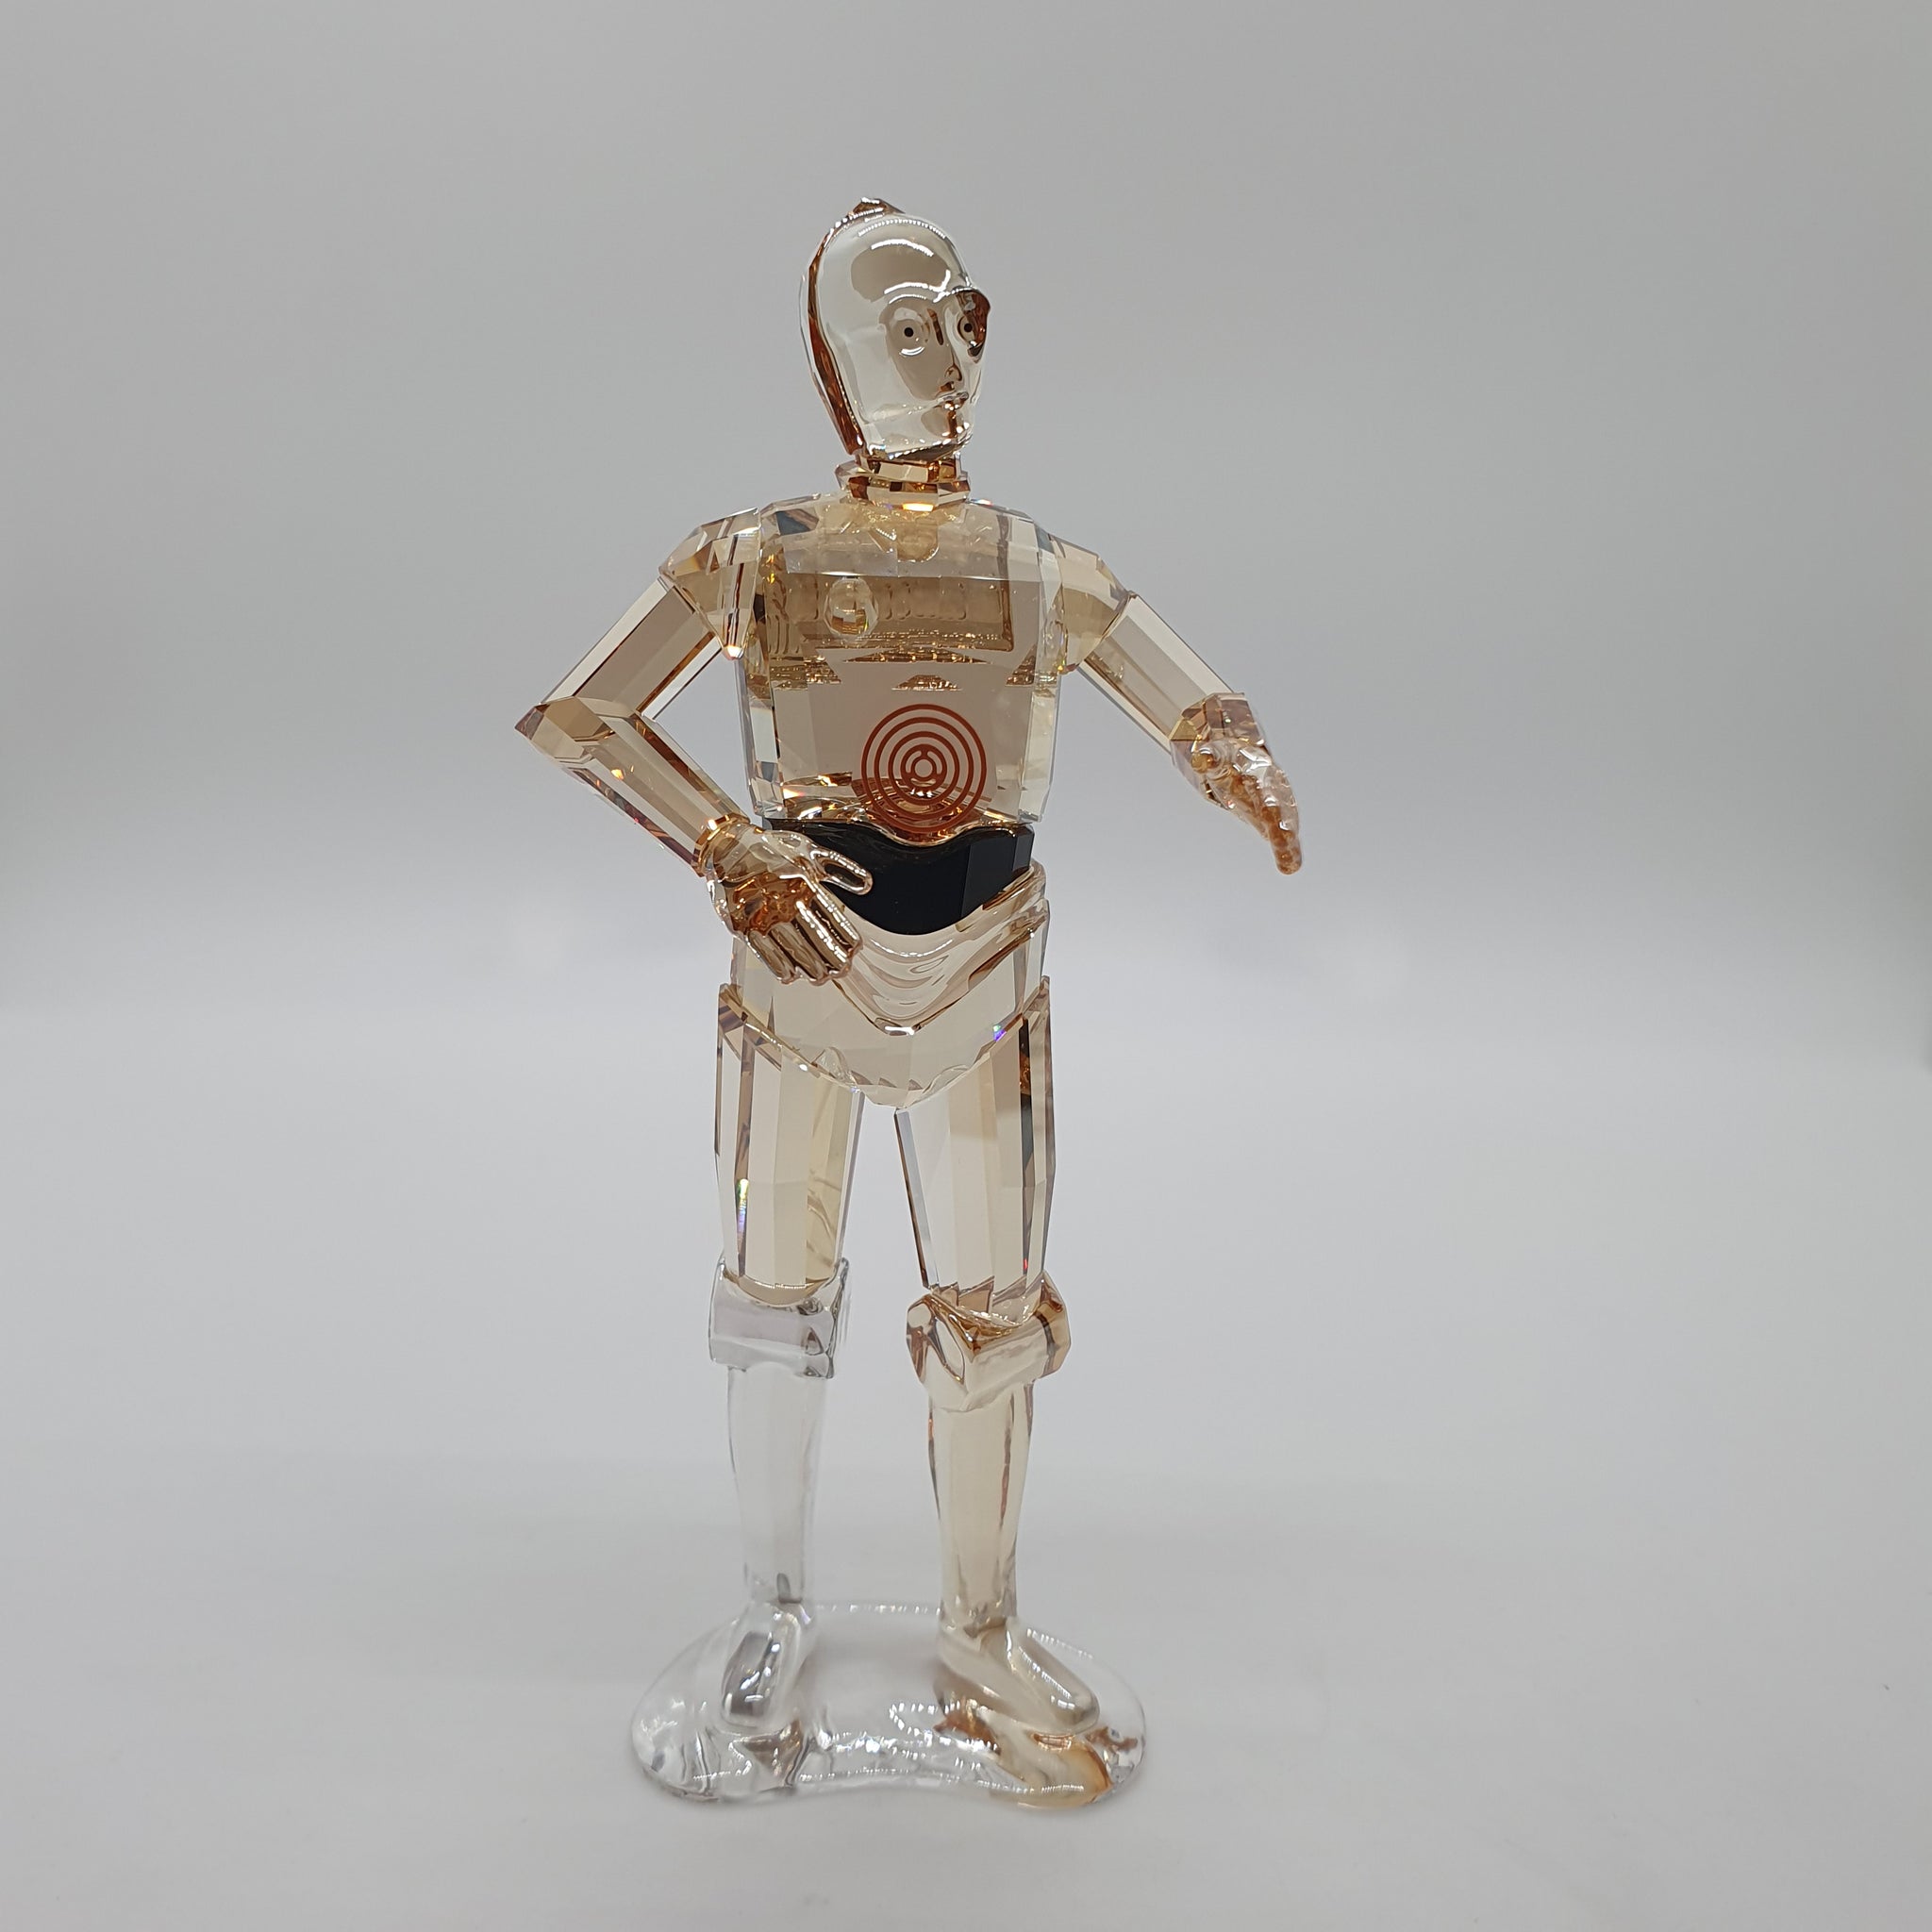 Swarovski Star Wars Disney C-3PO Robot Crystal Figurine A New Hope 2019  5473052 